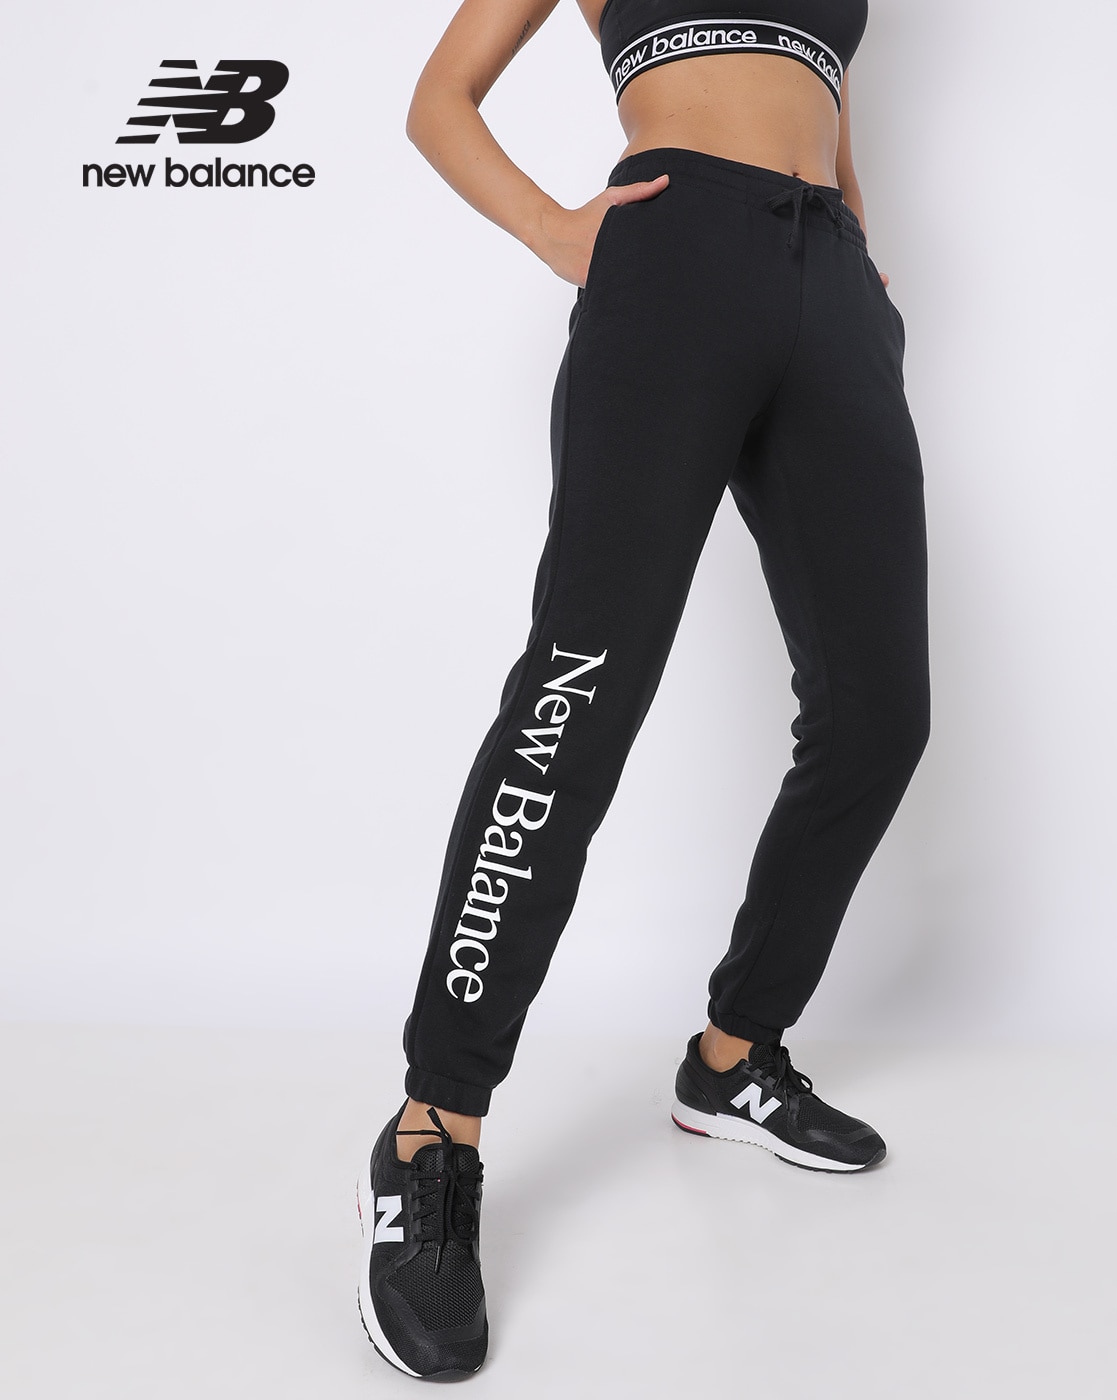 New Balance Women's Slim Track Pant